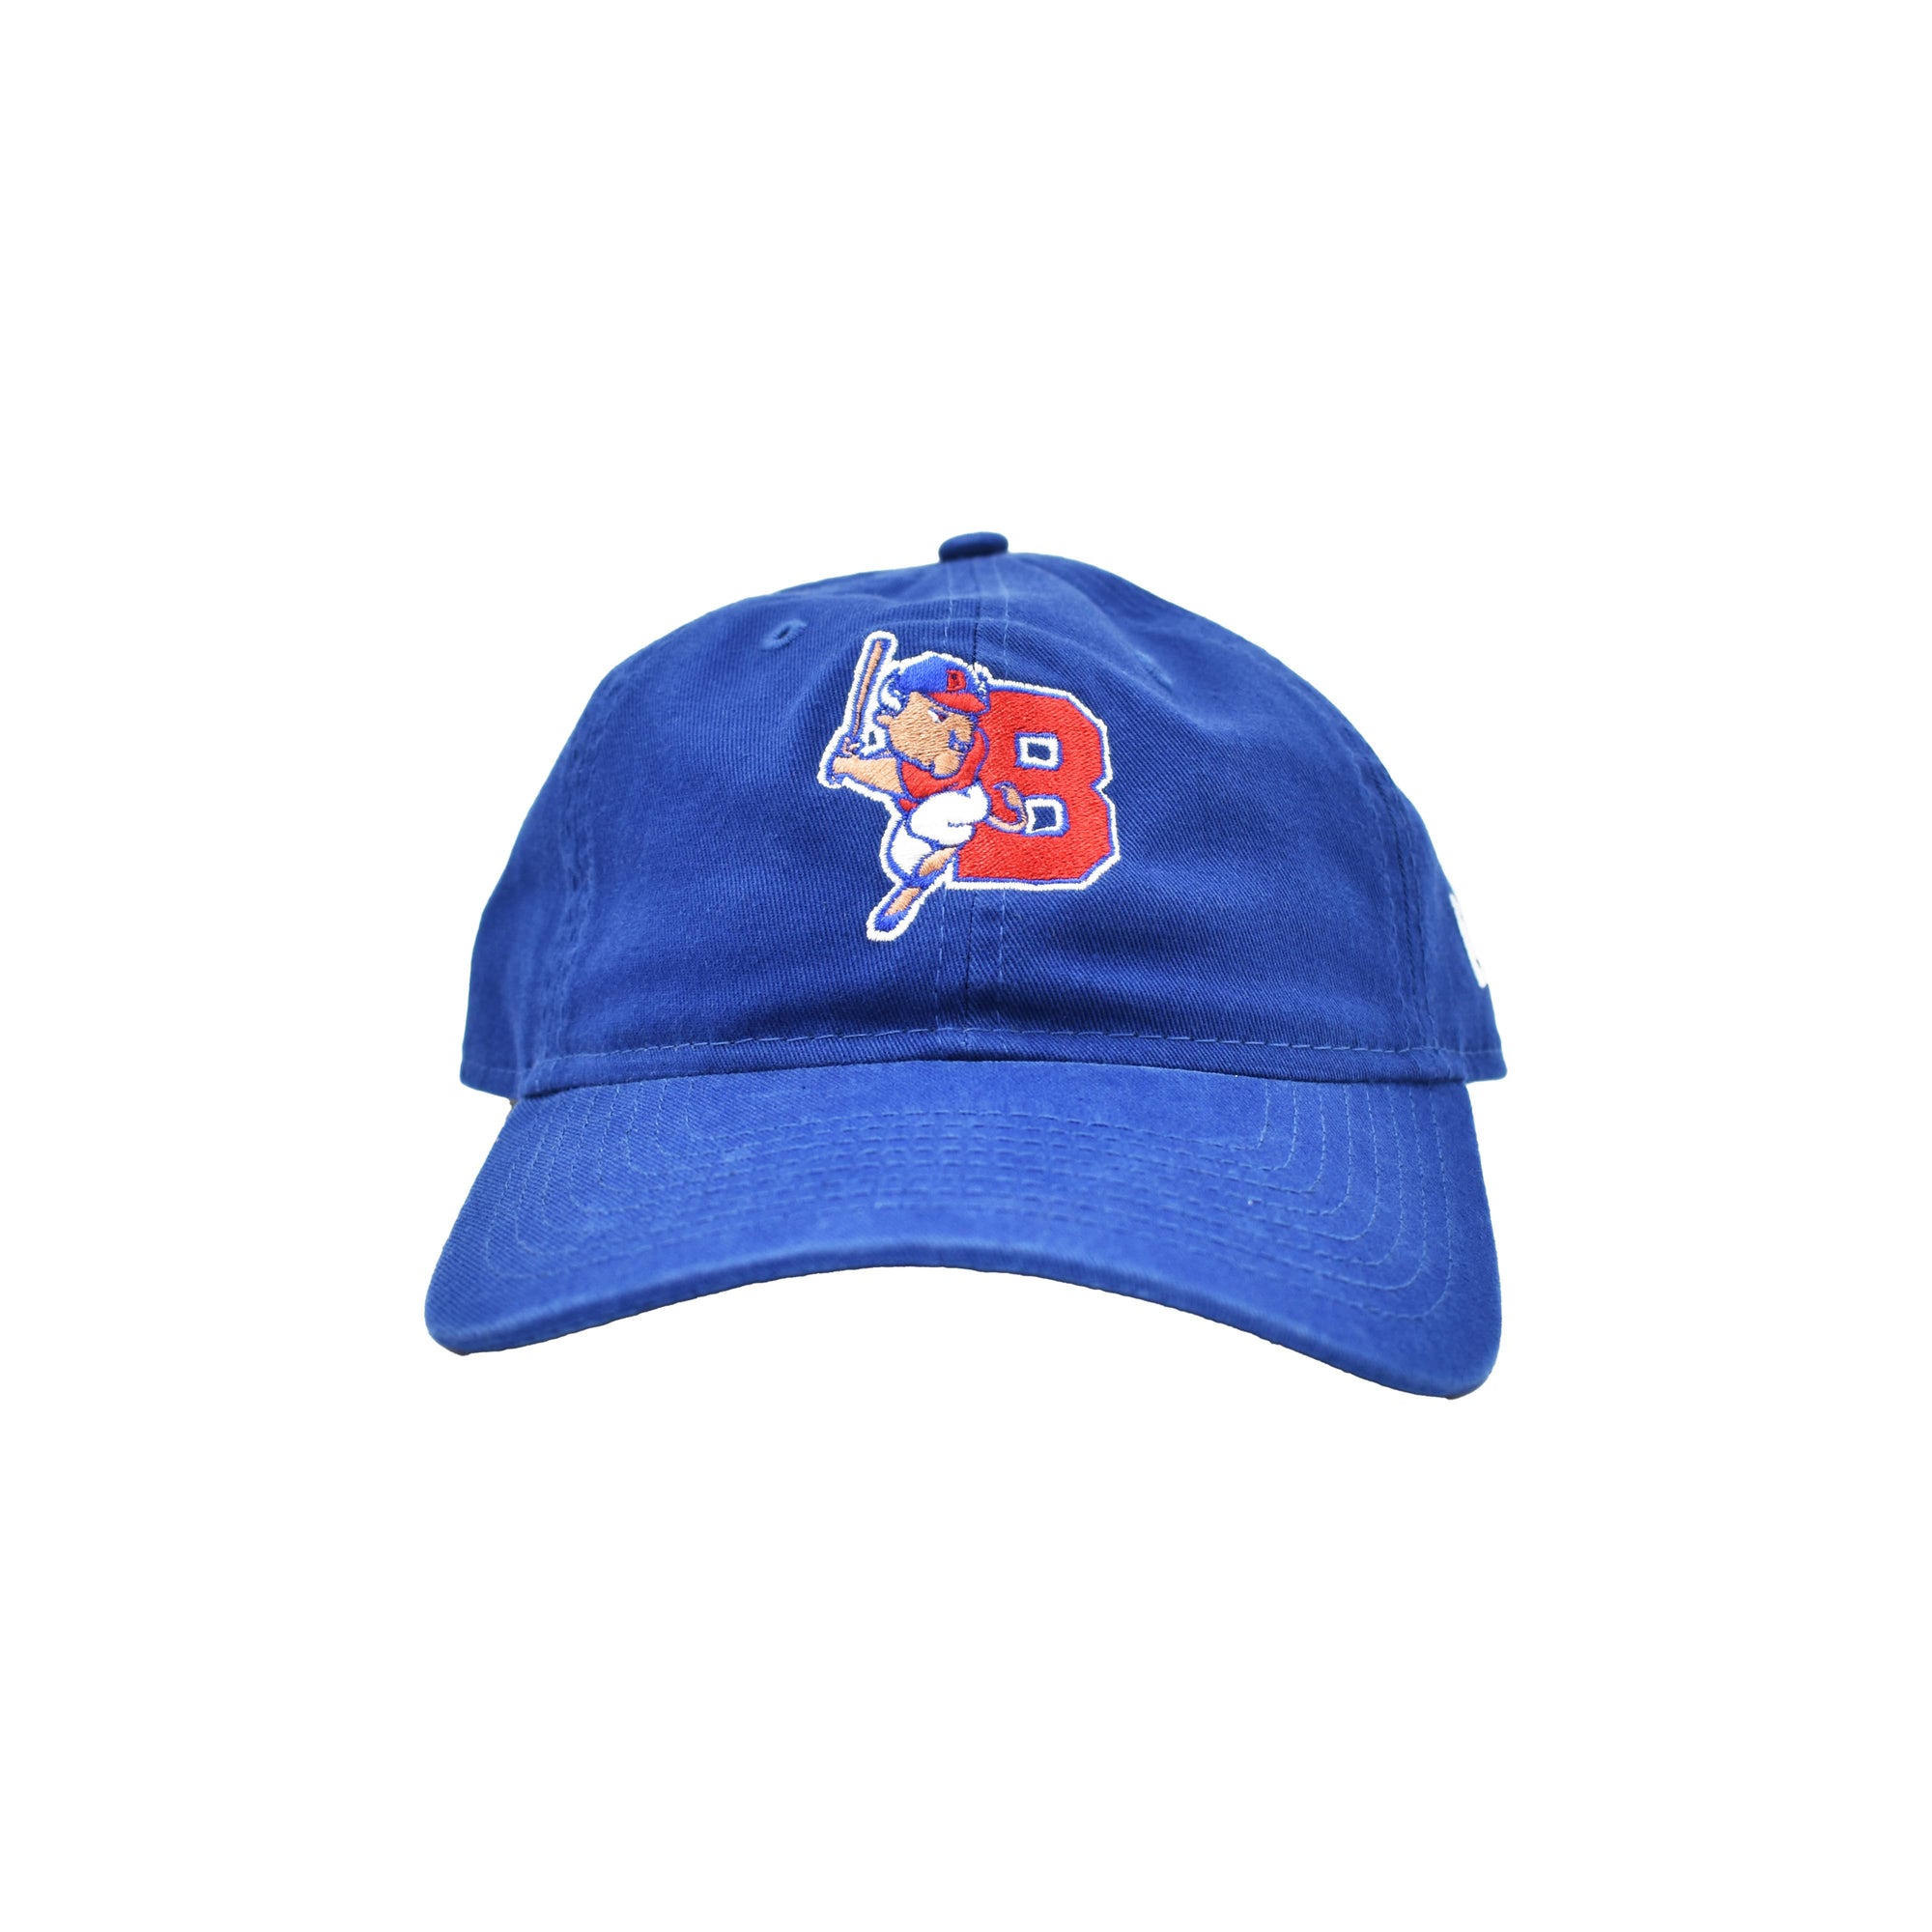 bflo store New Era Buffalo Bisons Royal Blue Adjustable Hat